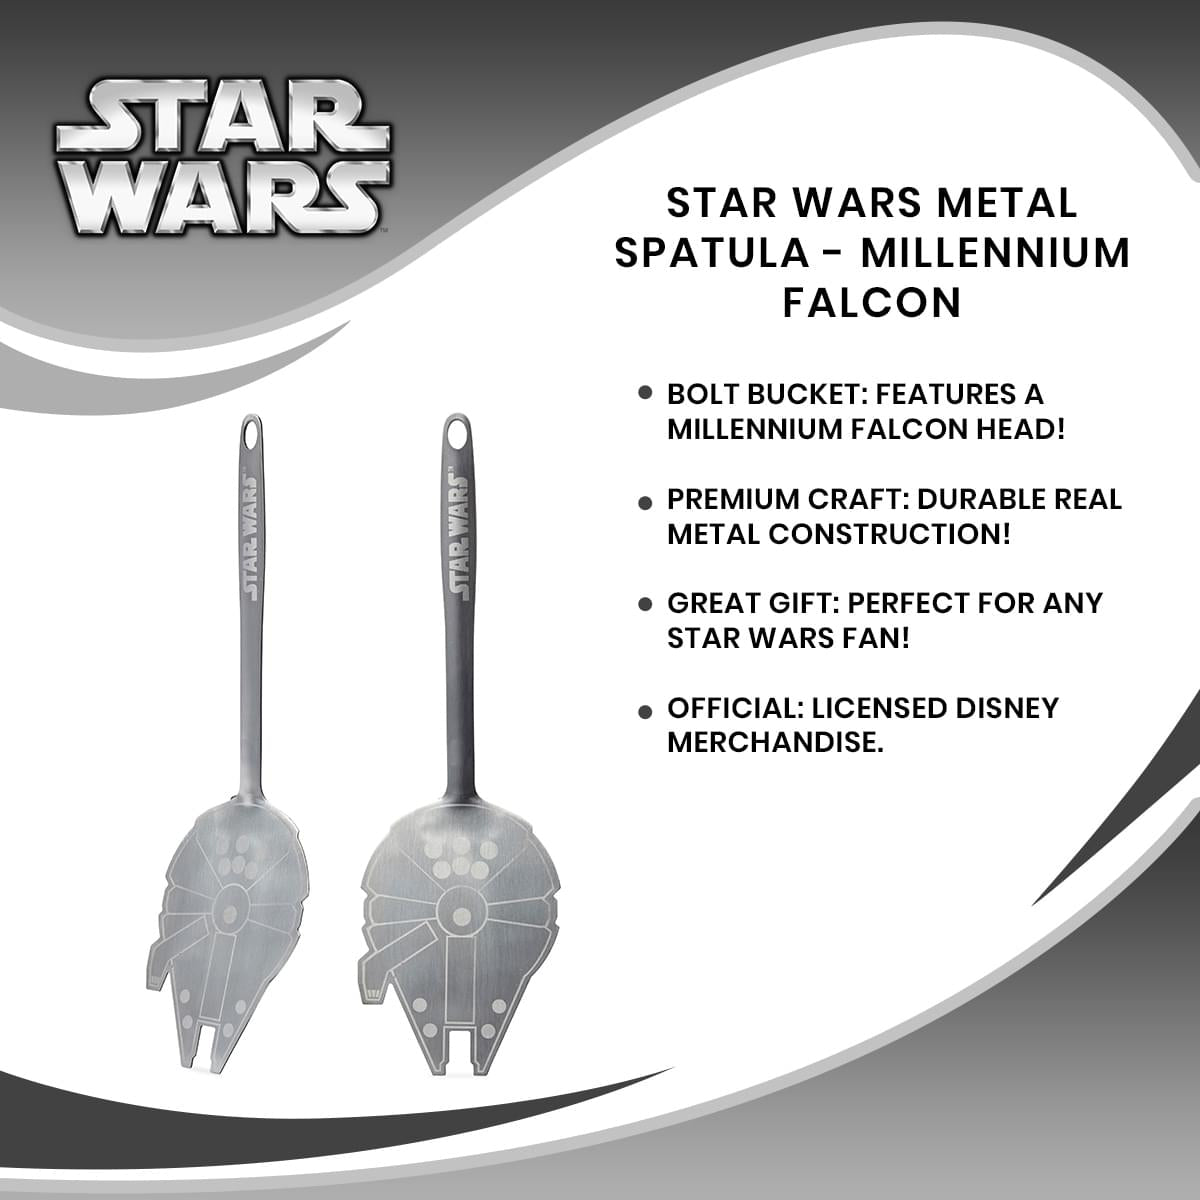 Star Wars Metal Spatula - Millennium Falcon